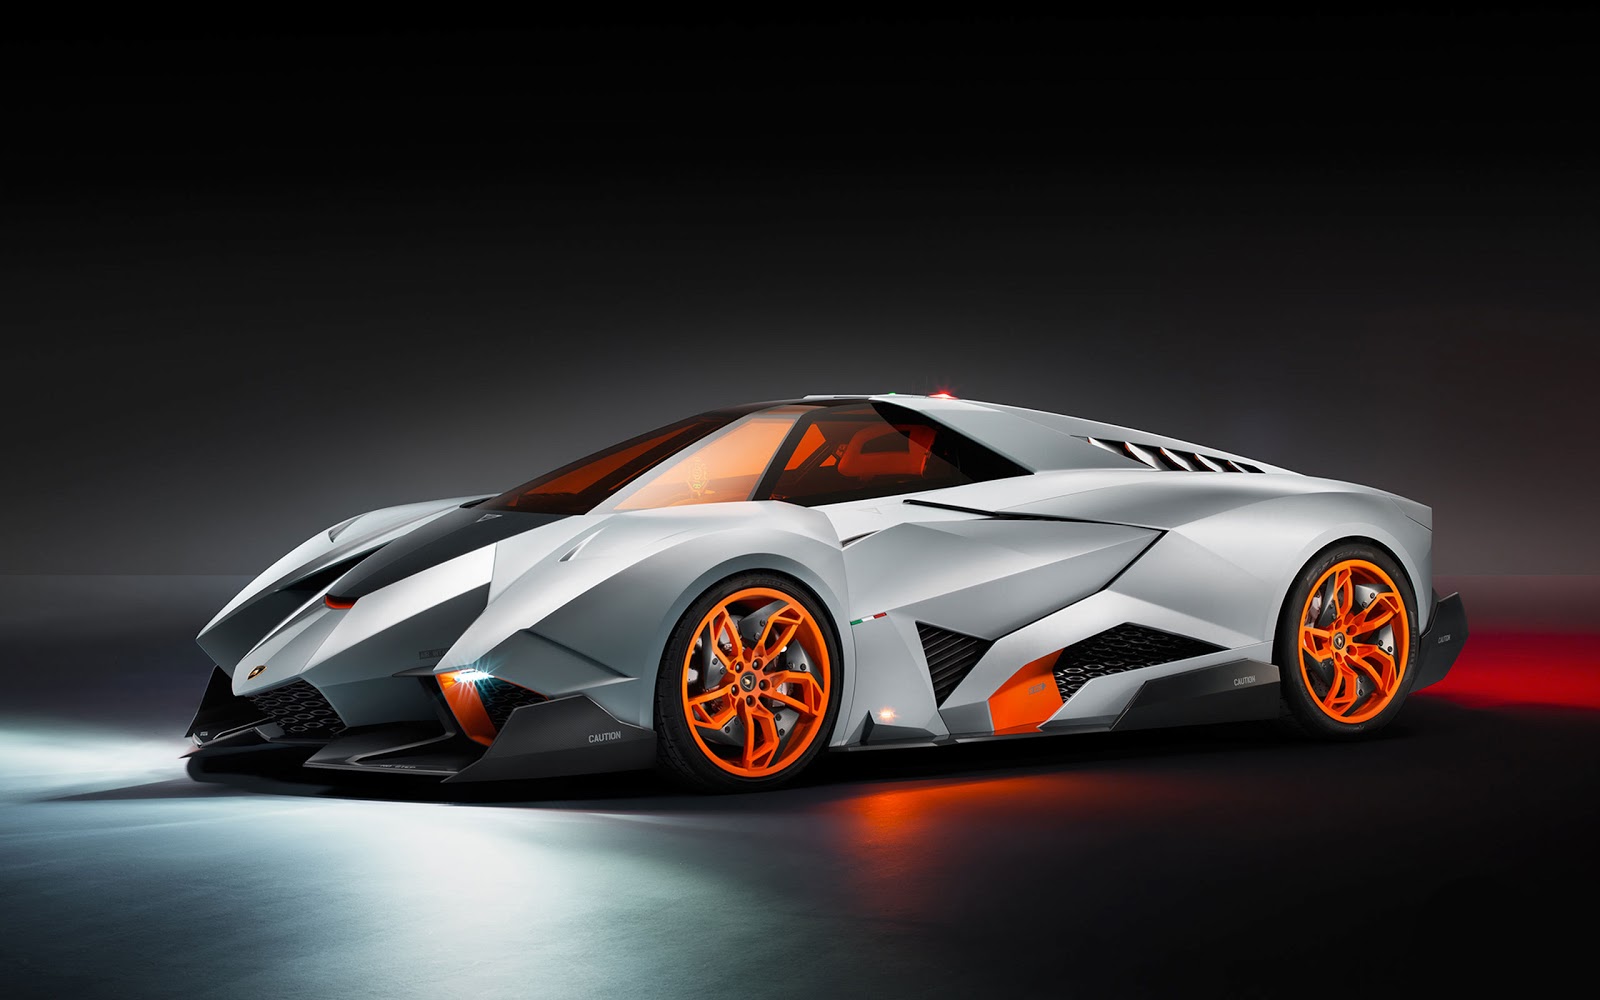 http://1.bp.blogspot.com/-sMkRMIaV5hY/UZdx4W2jQ1I/AAAAAAAAAnA/HARBz9xogCg/s1600/Lamborghini+Egoista+Concept+Car+Wallpaper.jpg